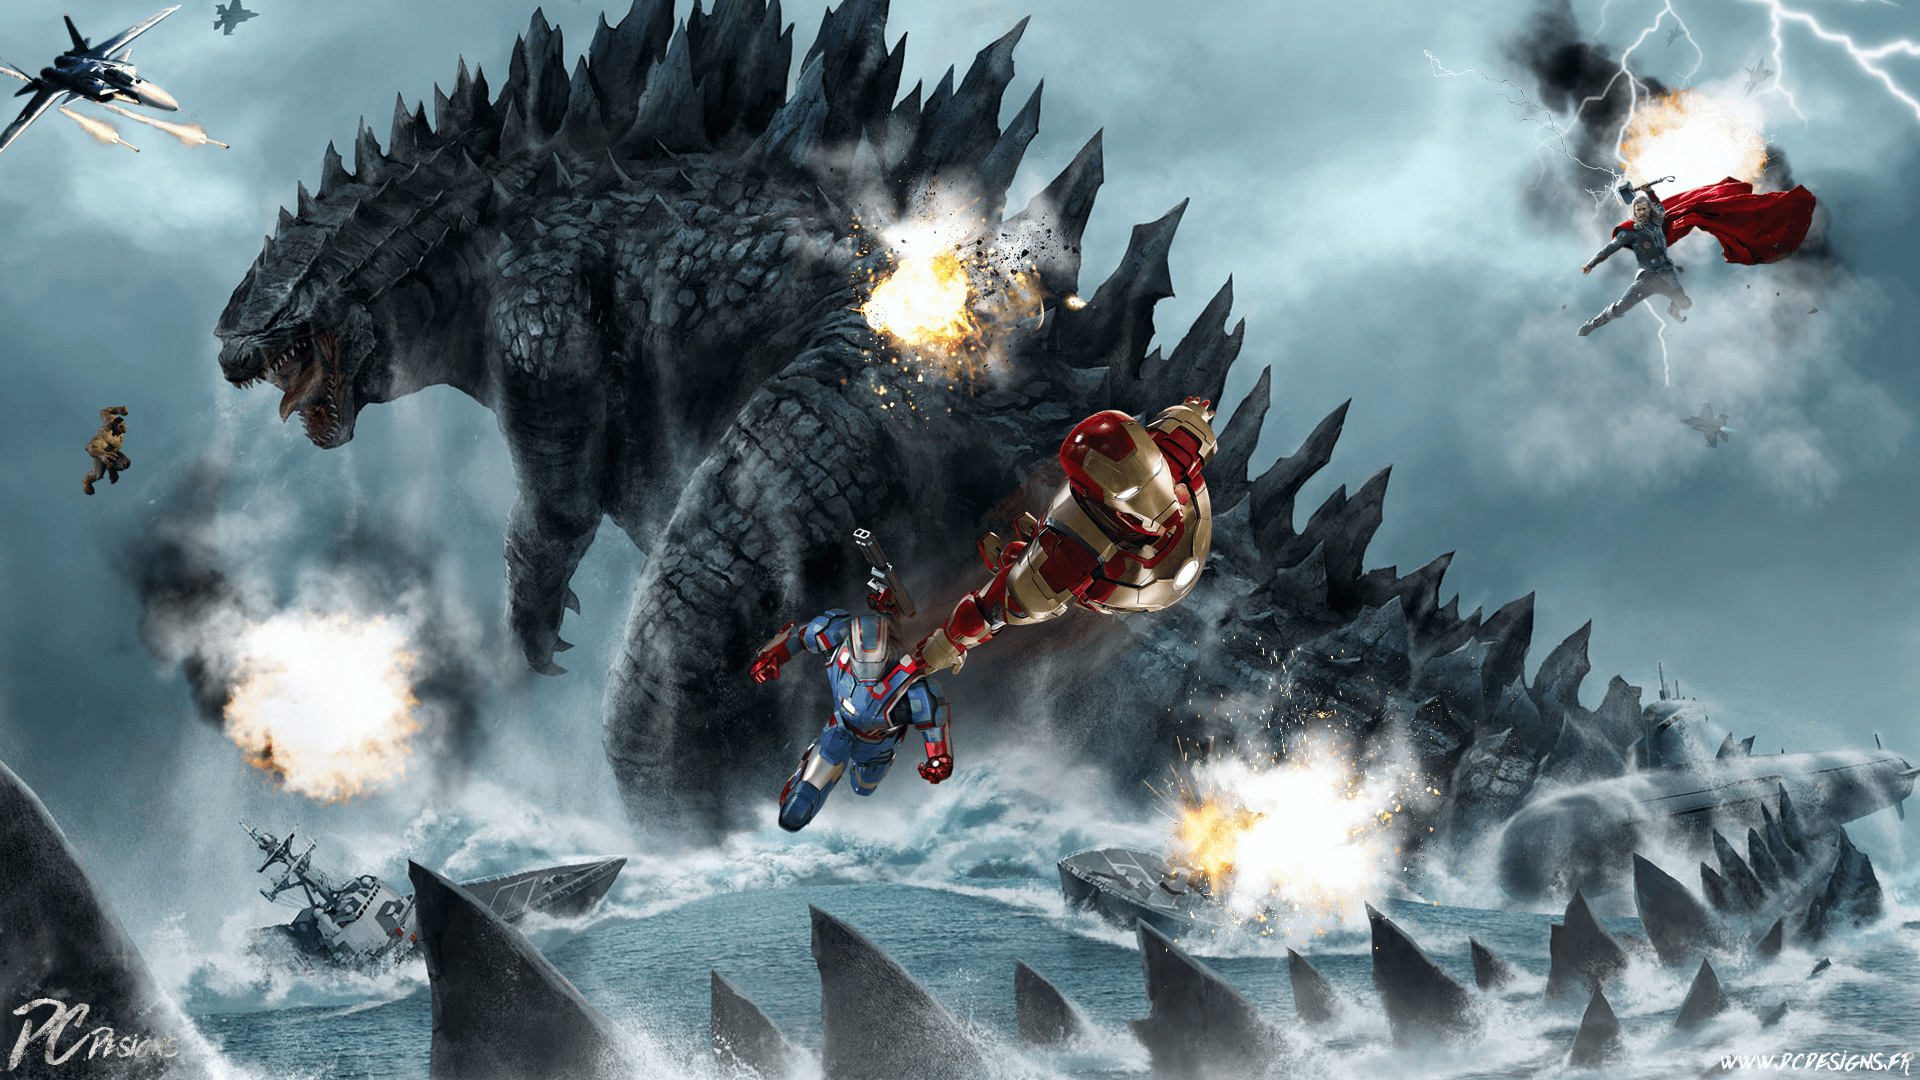 Godzilla Vs Avengers Full HD Wallpapers and Backgrounds Image